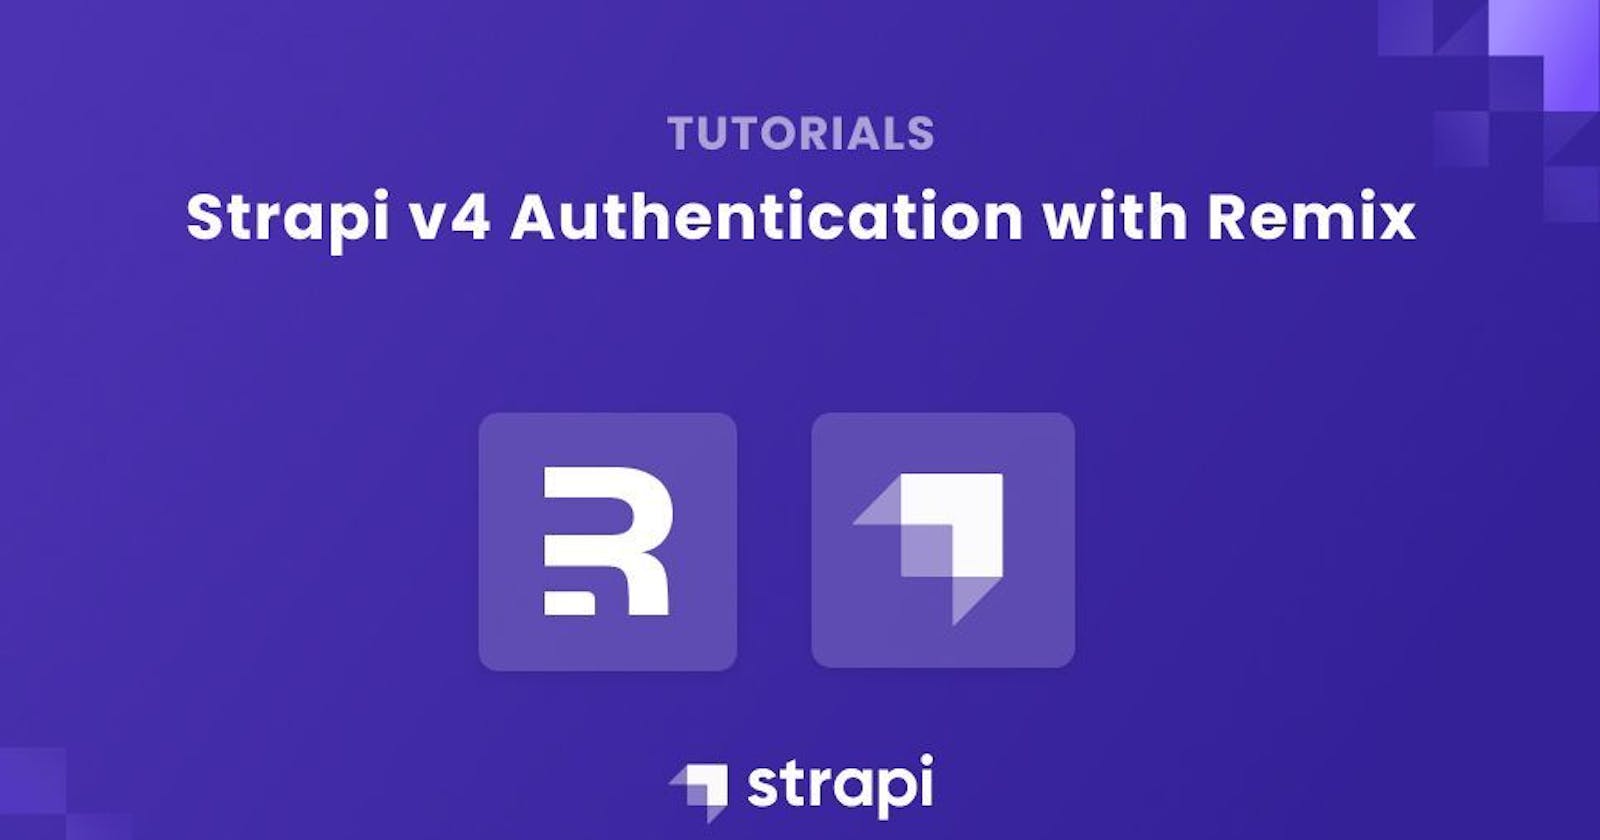 Strapi v4 Authentication with Remix